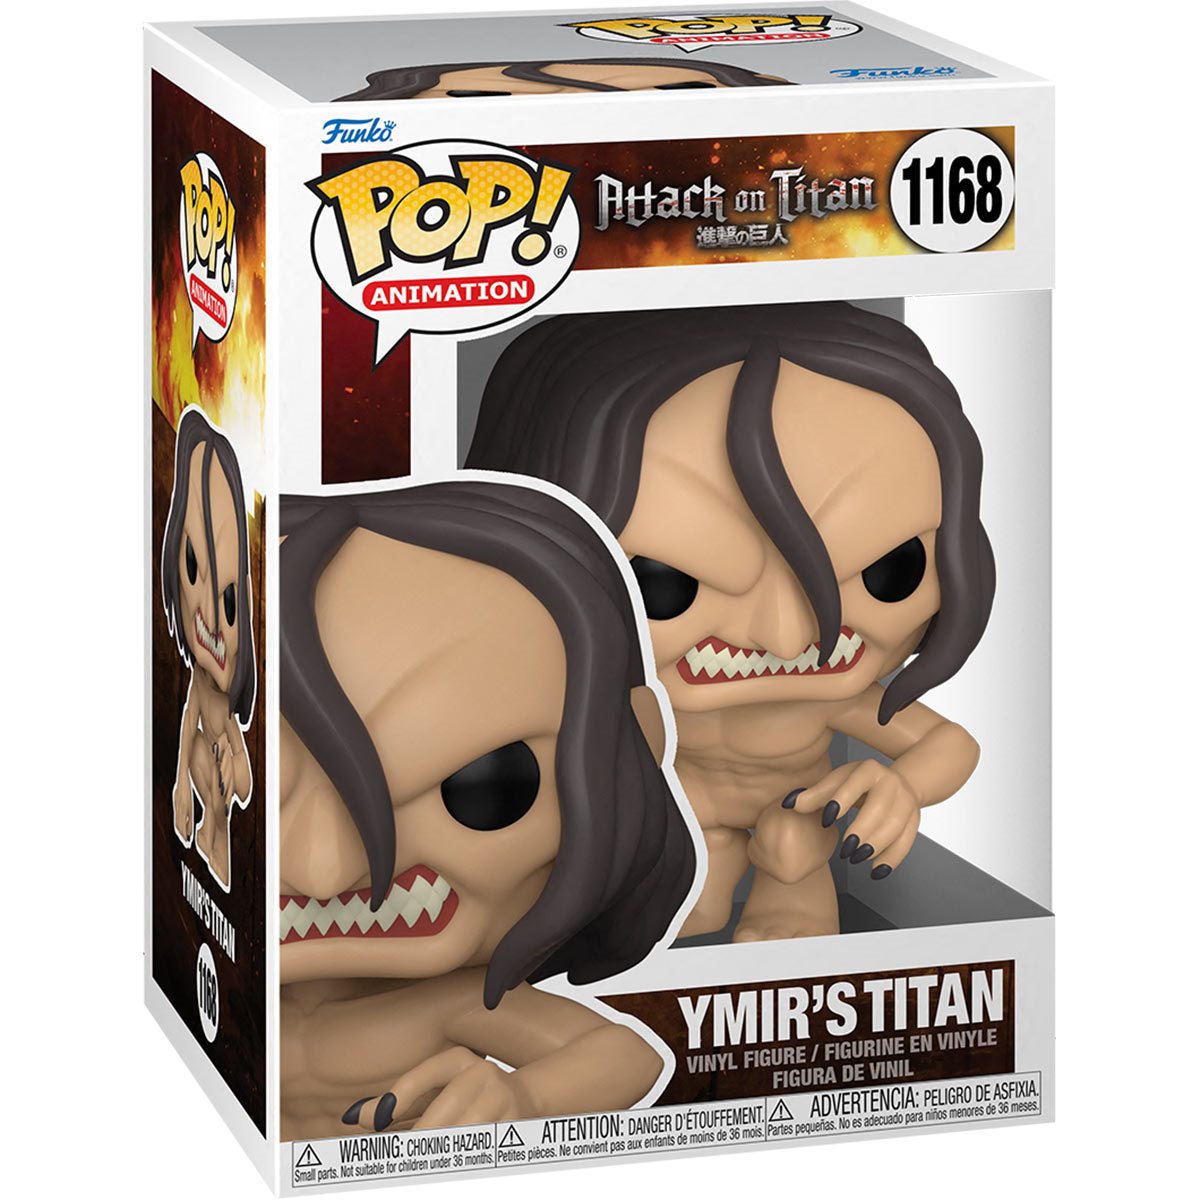 Attack on Titan: Ymir's Titan Pop! Vinyl Figure (1168)